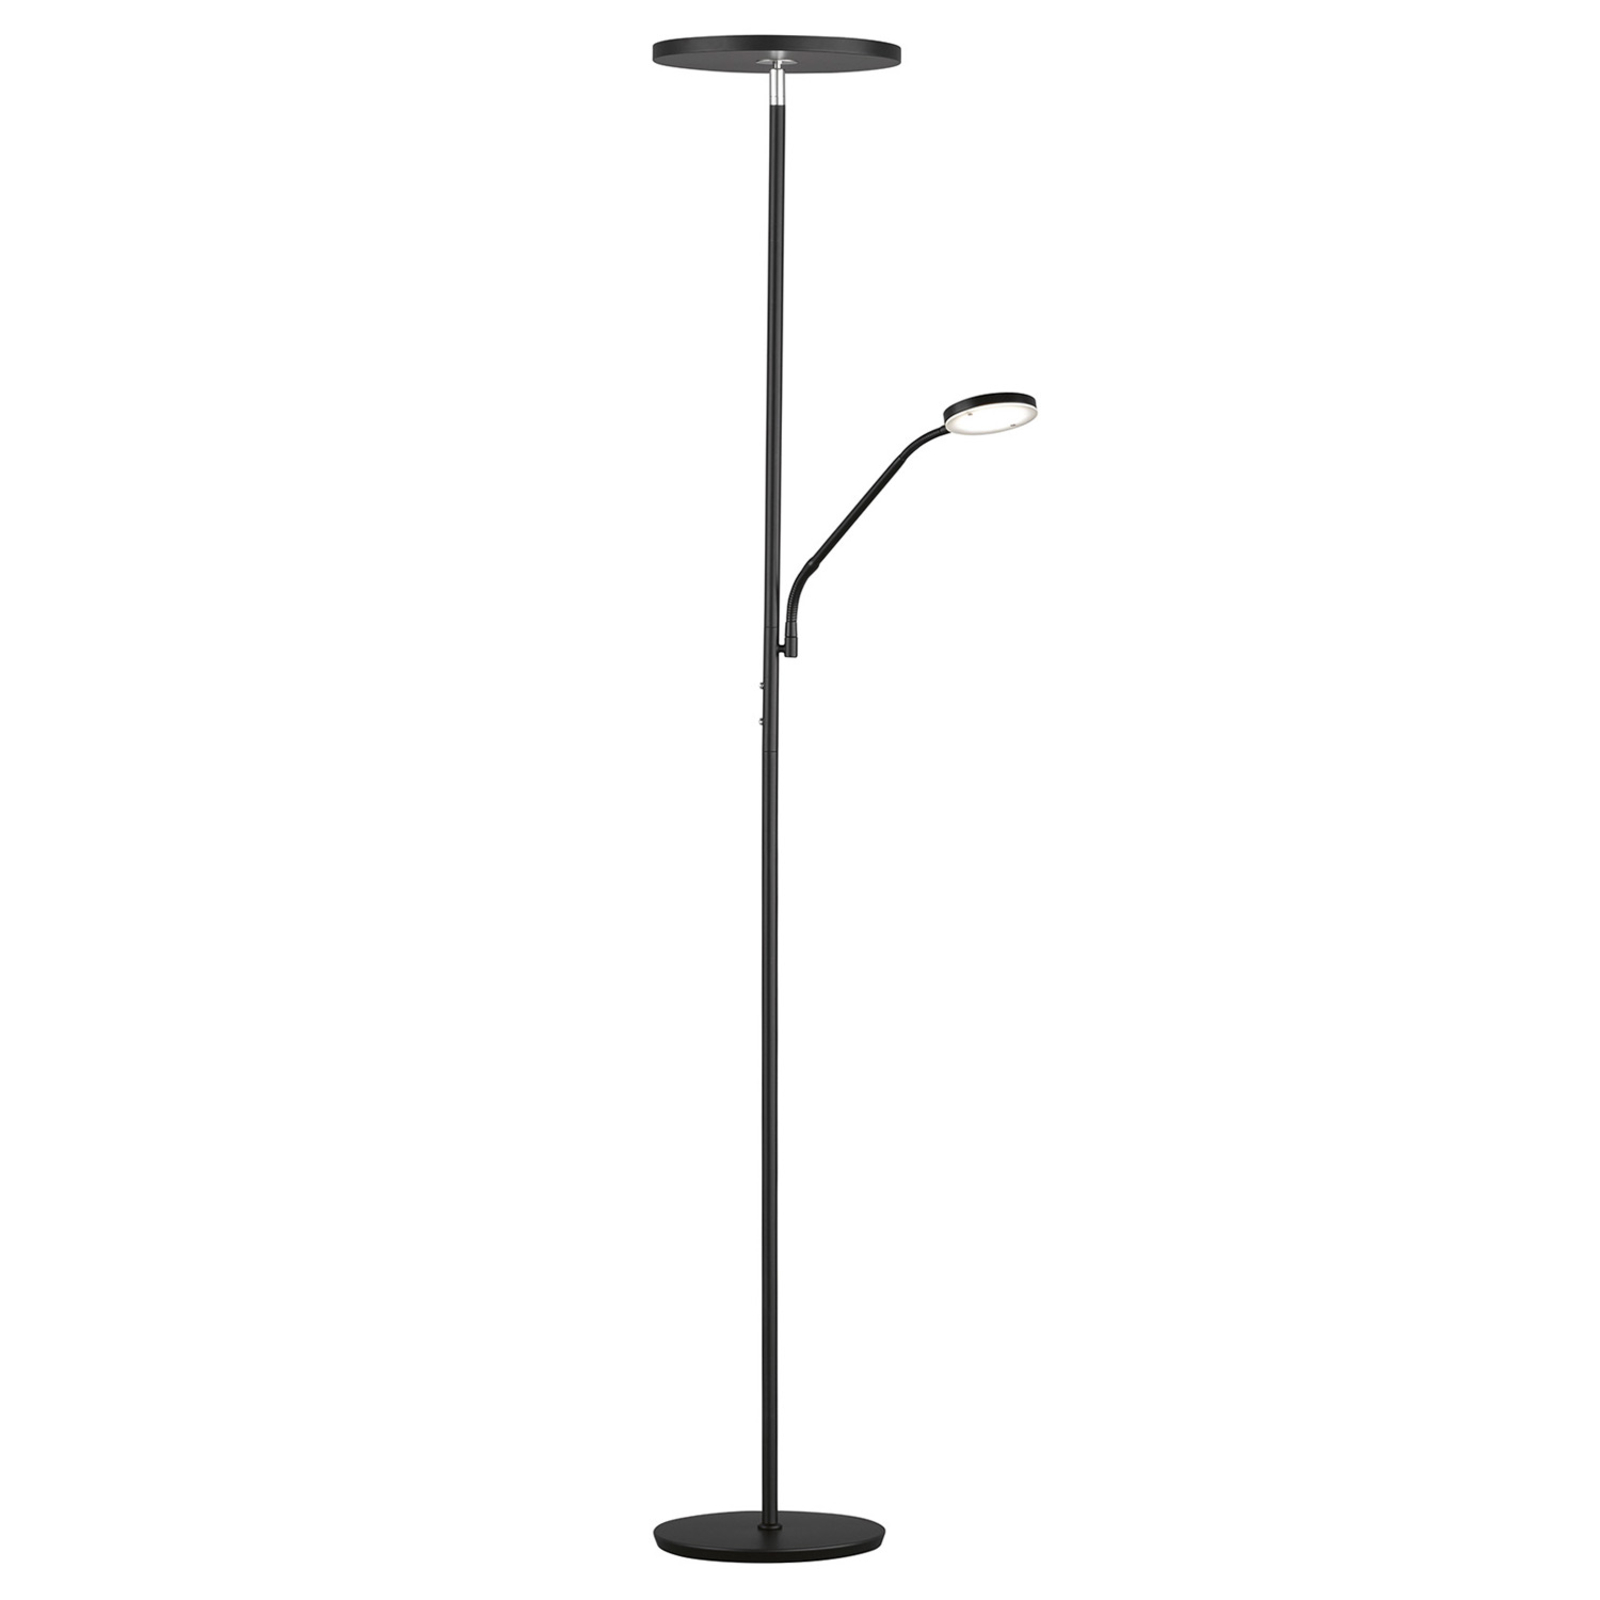 Fabi LED floor lamp with reading lamp, matt black